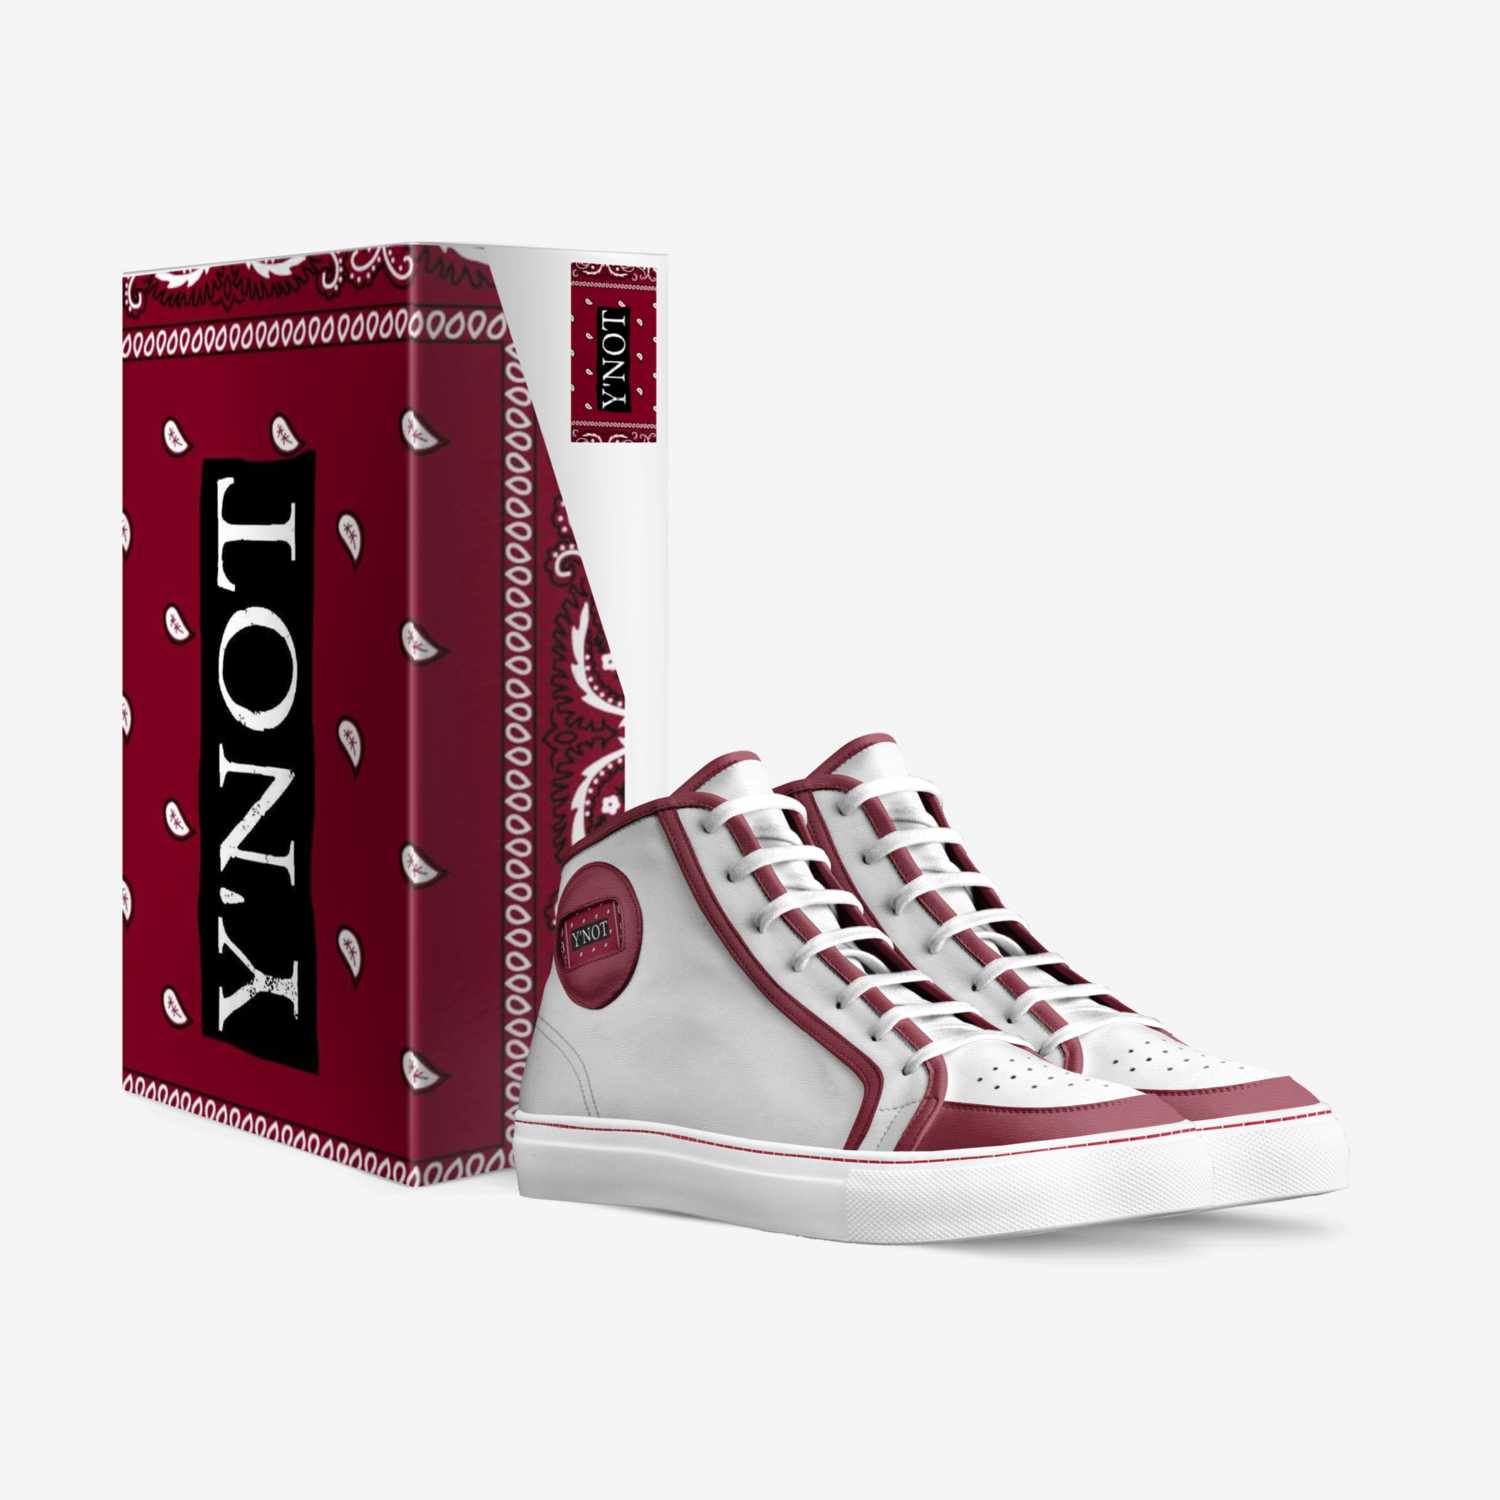 Ynot custom made in Italy shoes by Tony Johnson | Box view